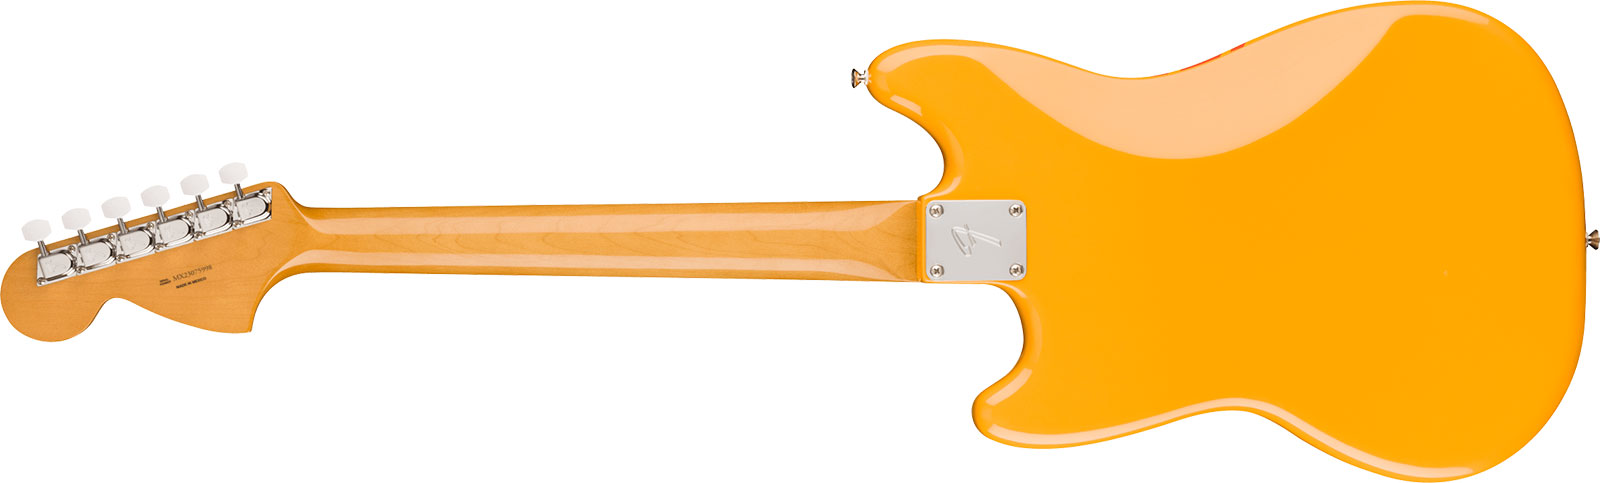 Fender Mustang 70s Competition Vintera 2 Mex 2s Trem Rw - Competition Orange - Retro-Rock-E-Gitarre - Variation 1